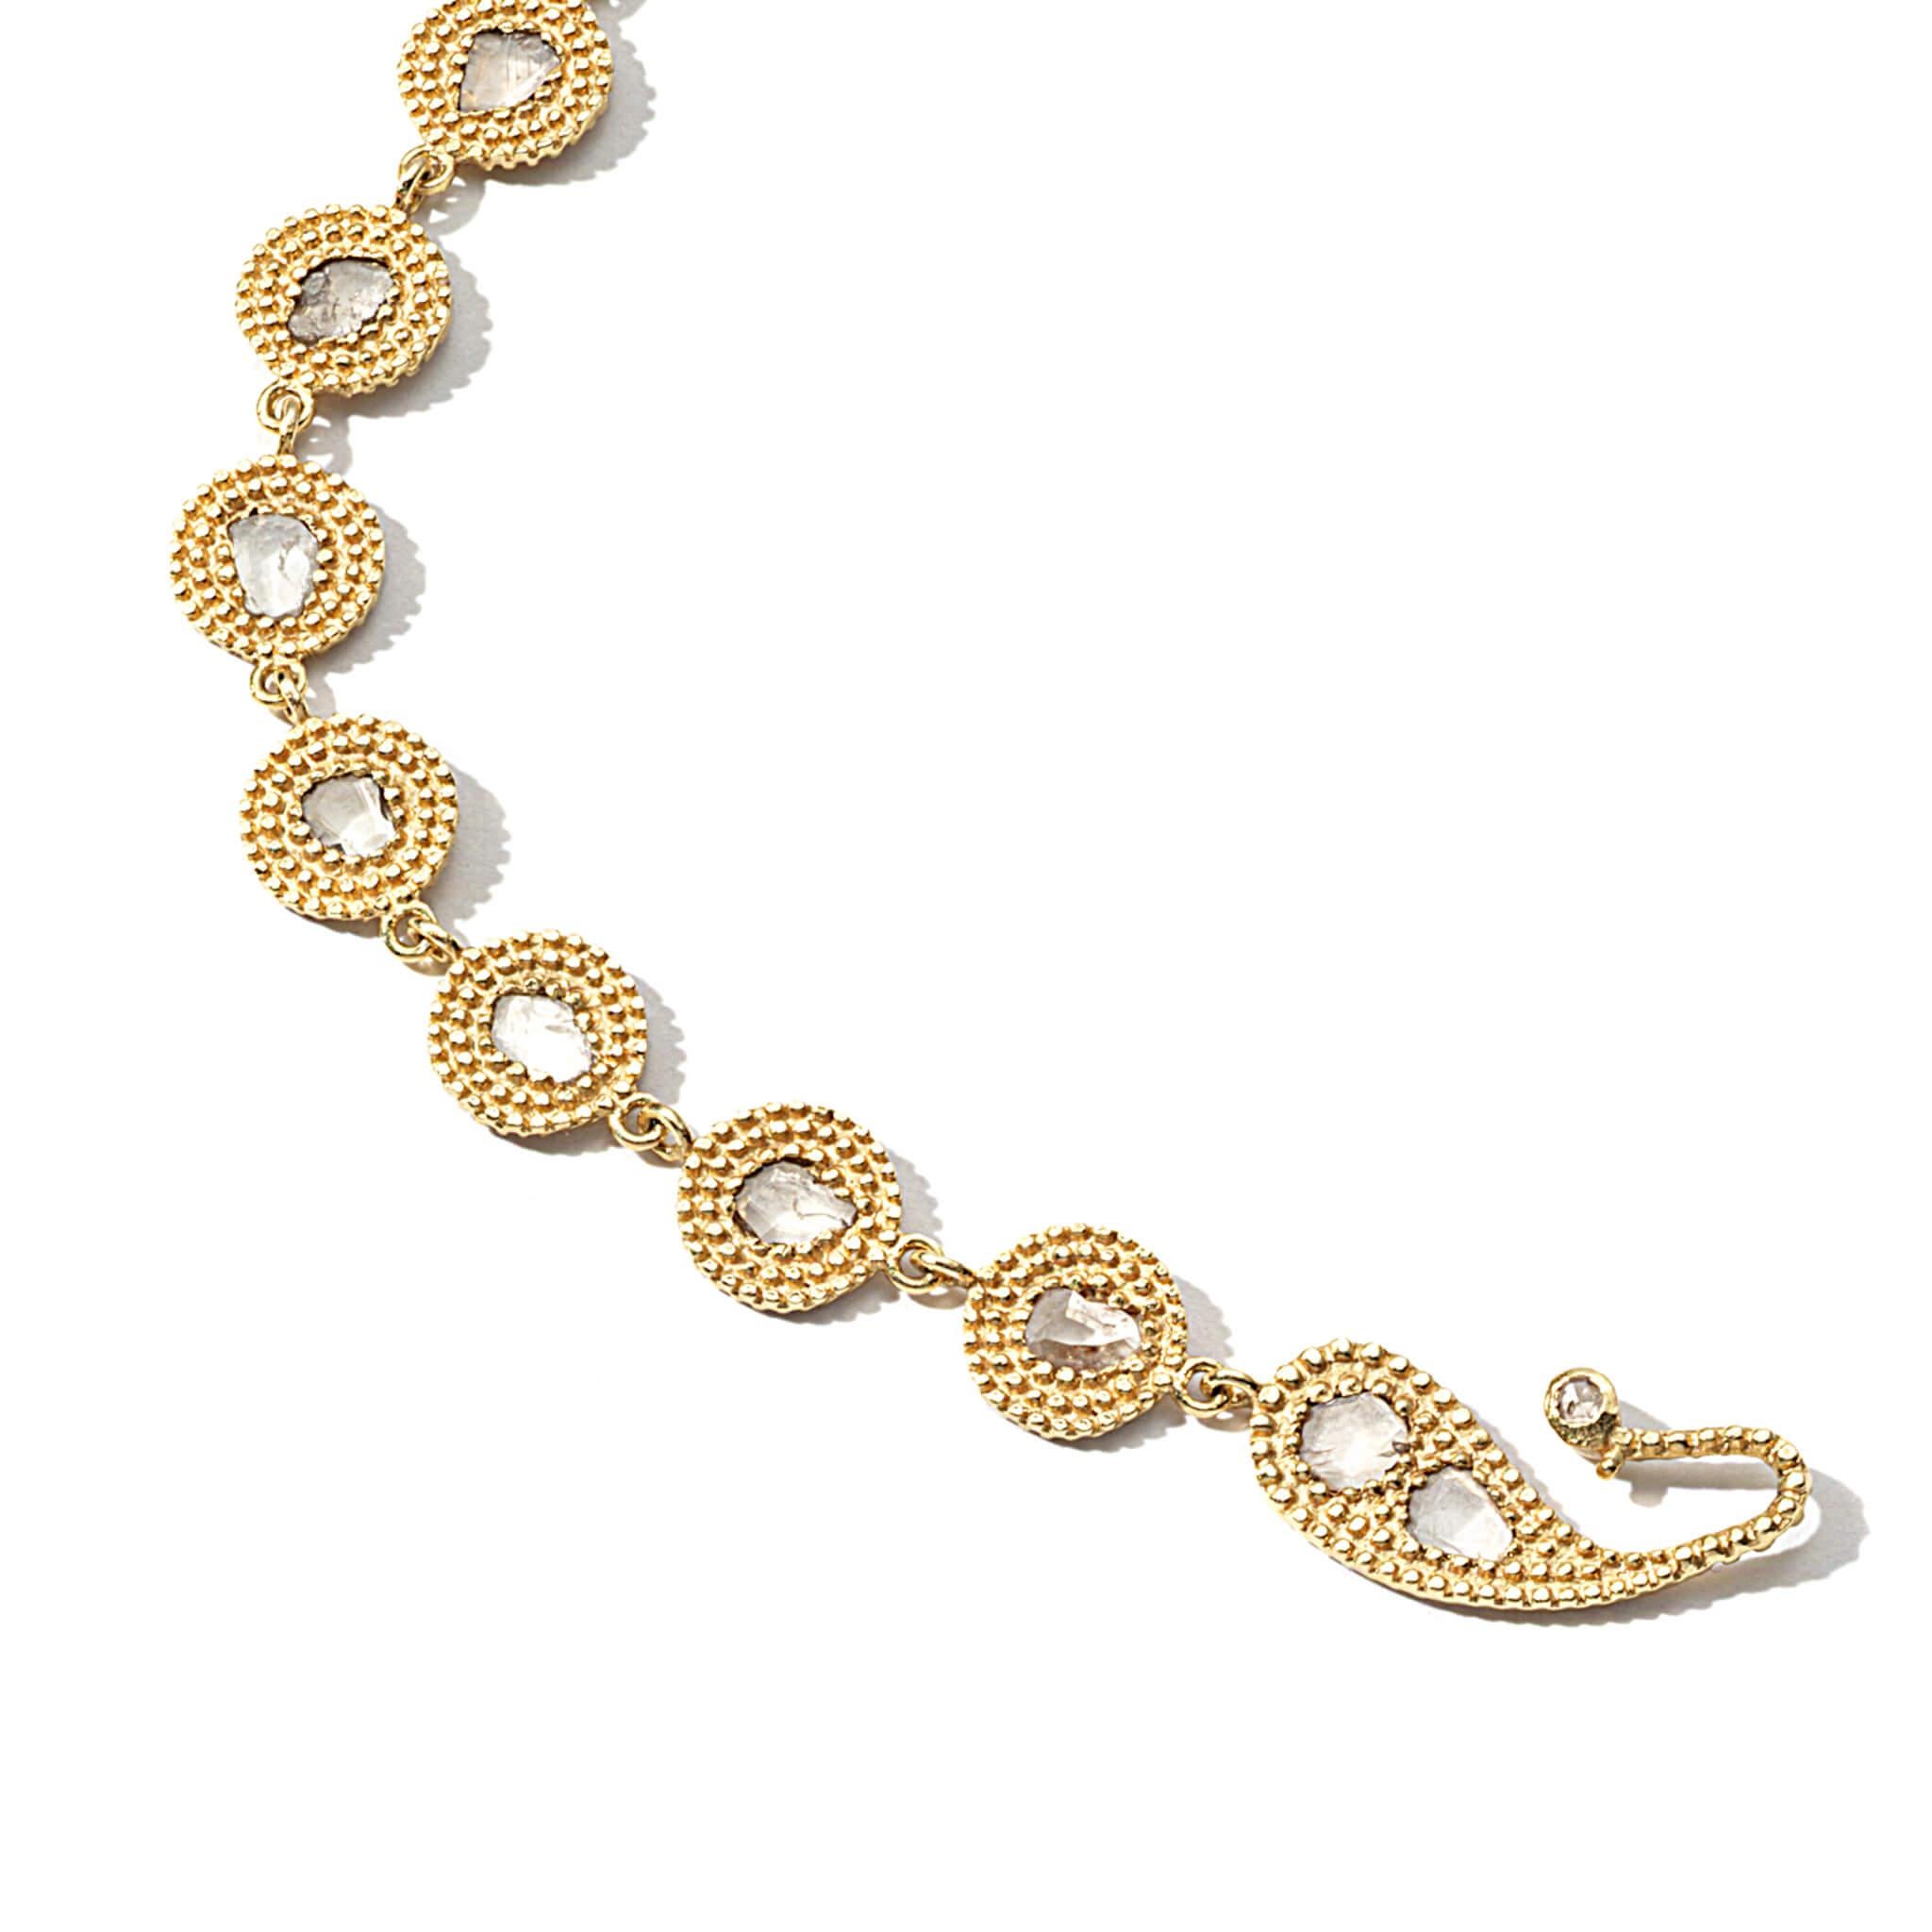 20 karat gold jewelry